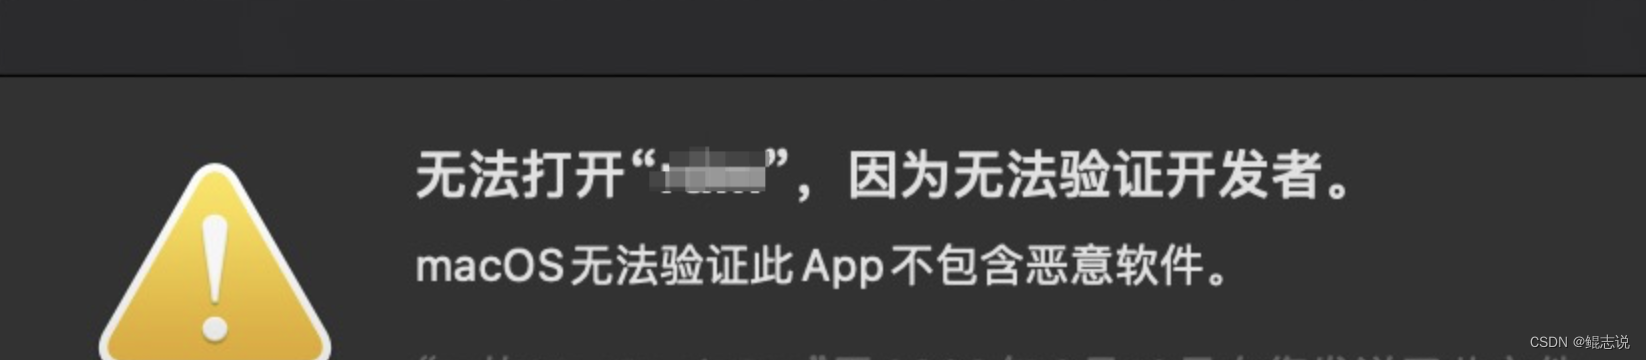 mac：彻底解决-安装应用后提示：无法打开“XXX”，因为无法验证开发者的问题；无法验证此App不包含恶意软件